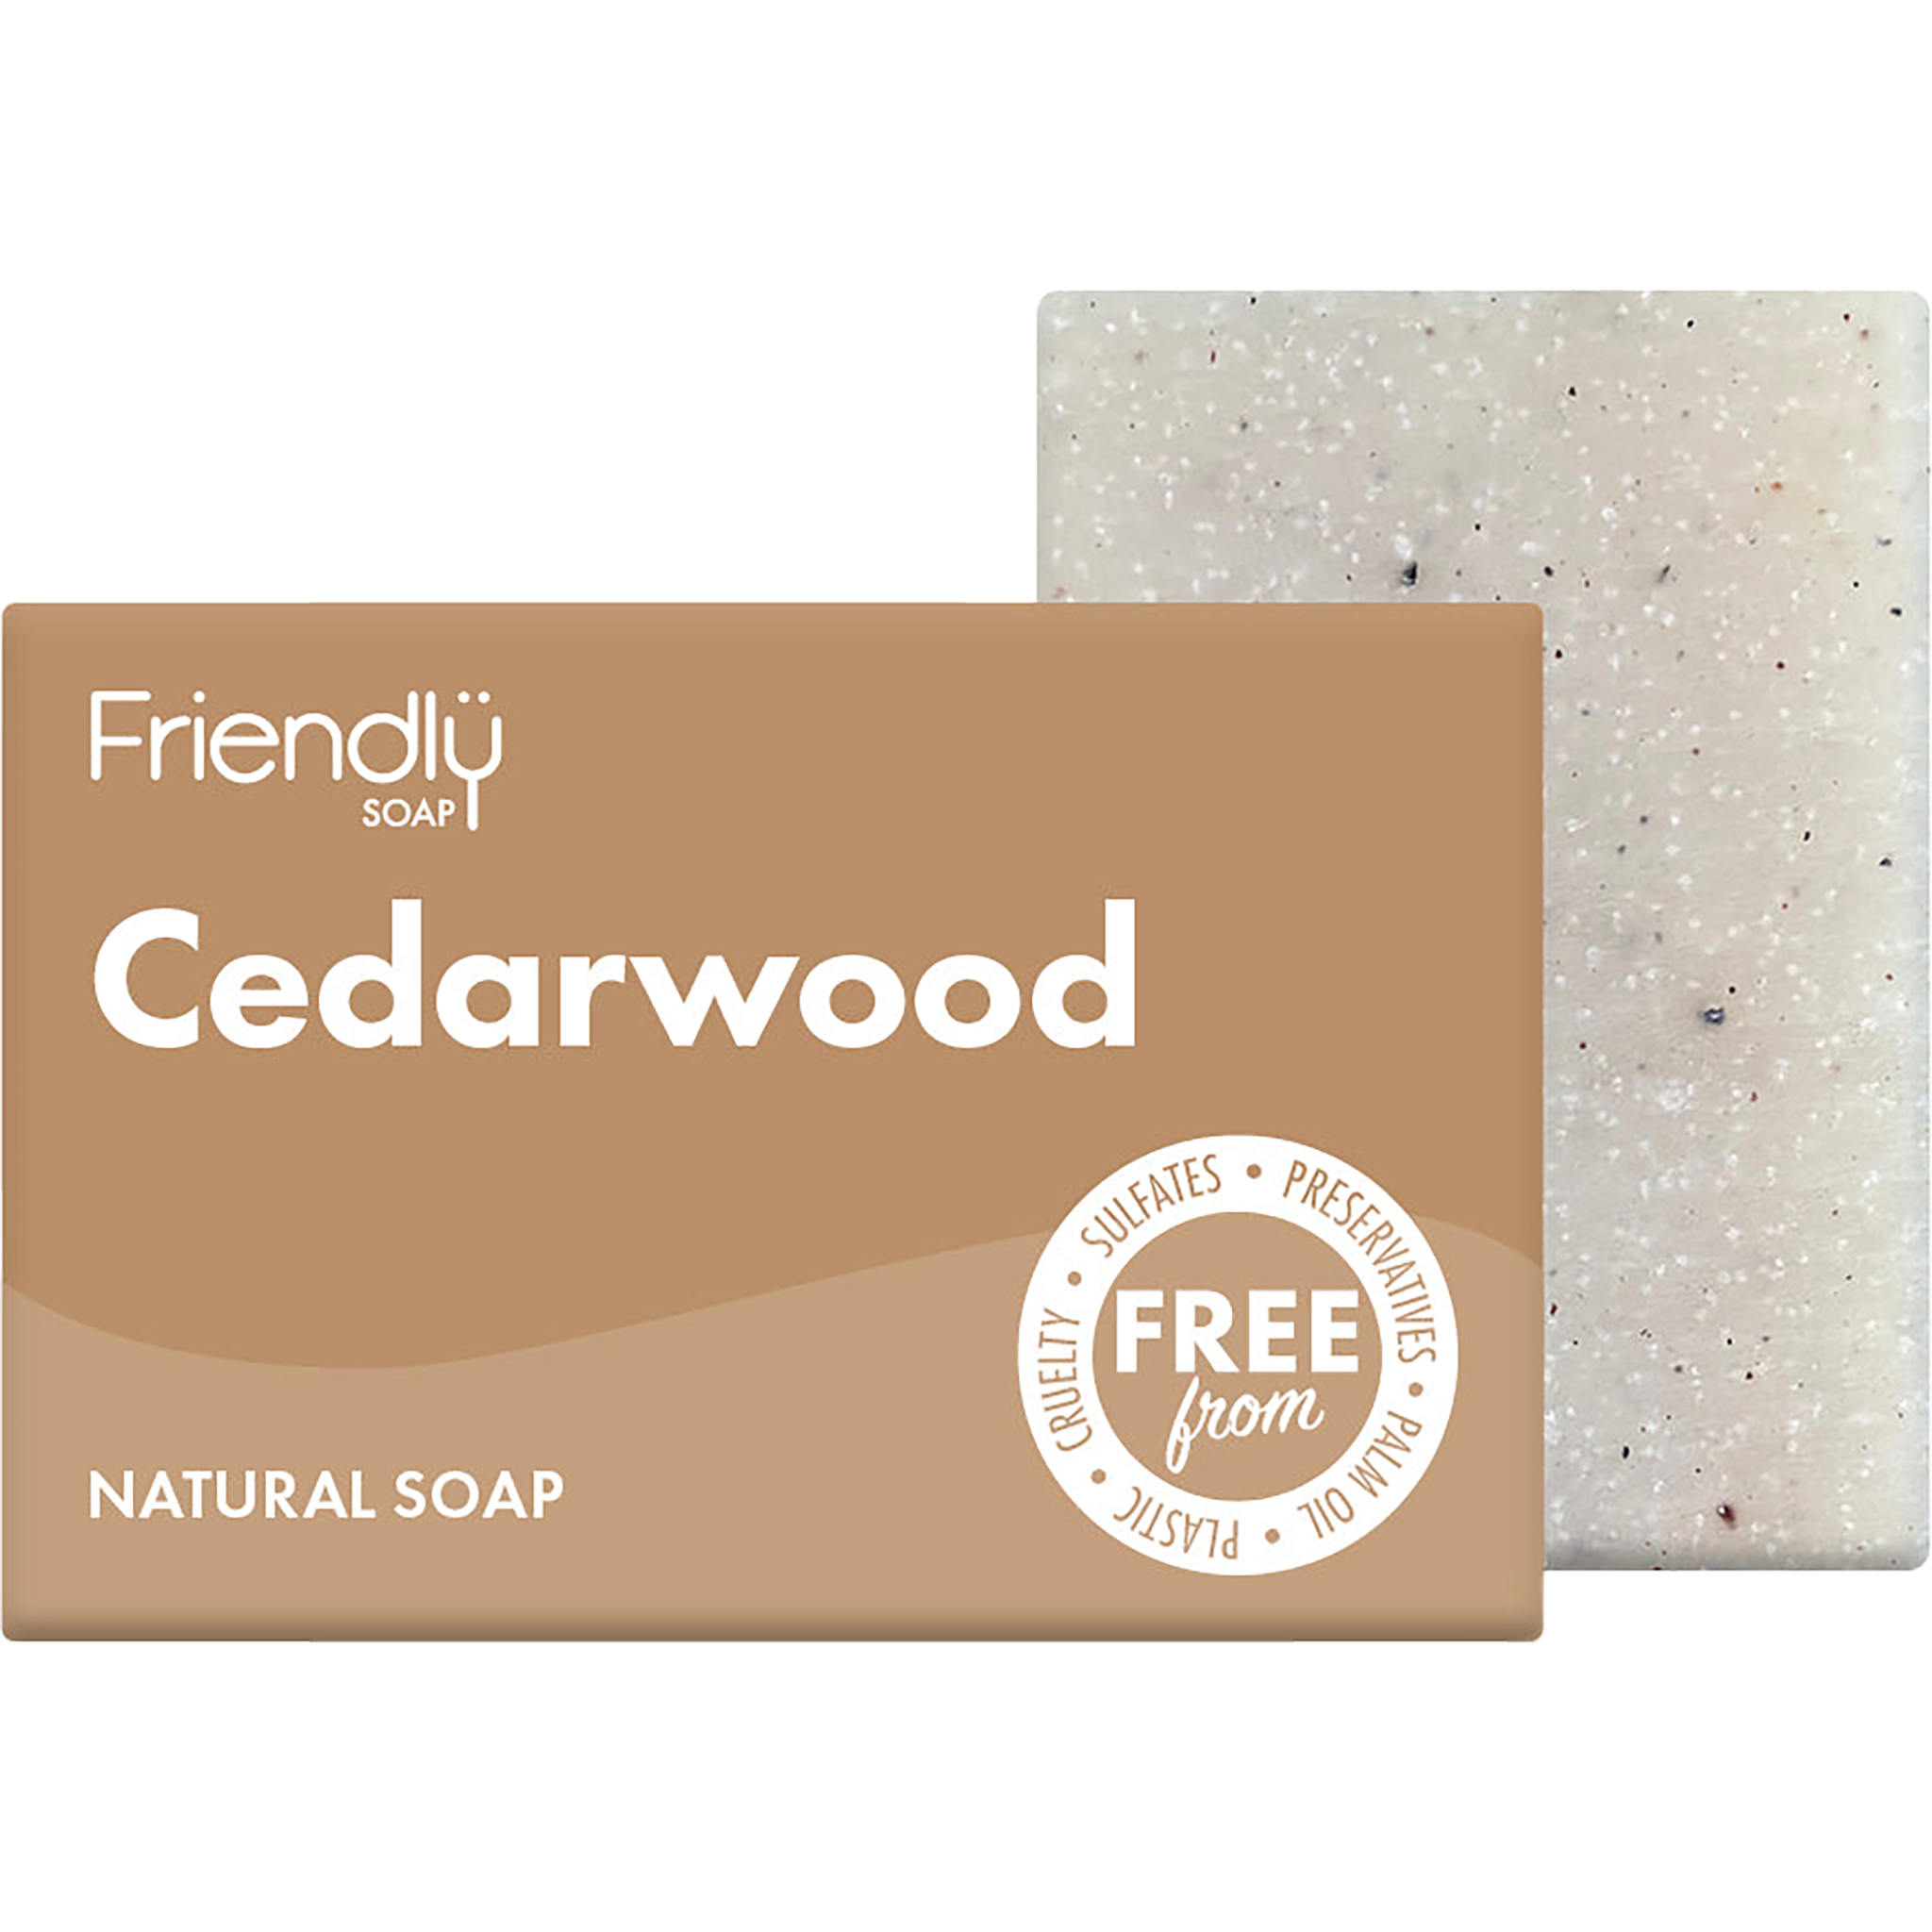 Cedarwood Soap Bar